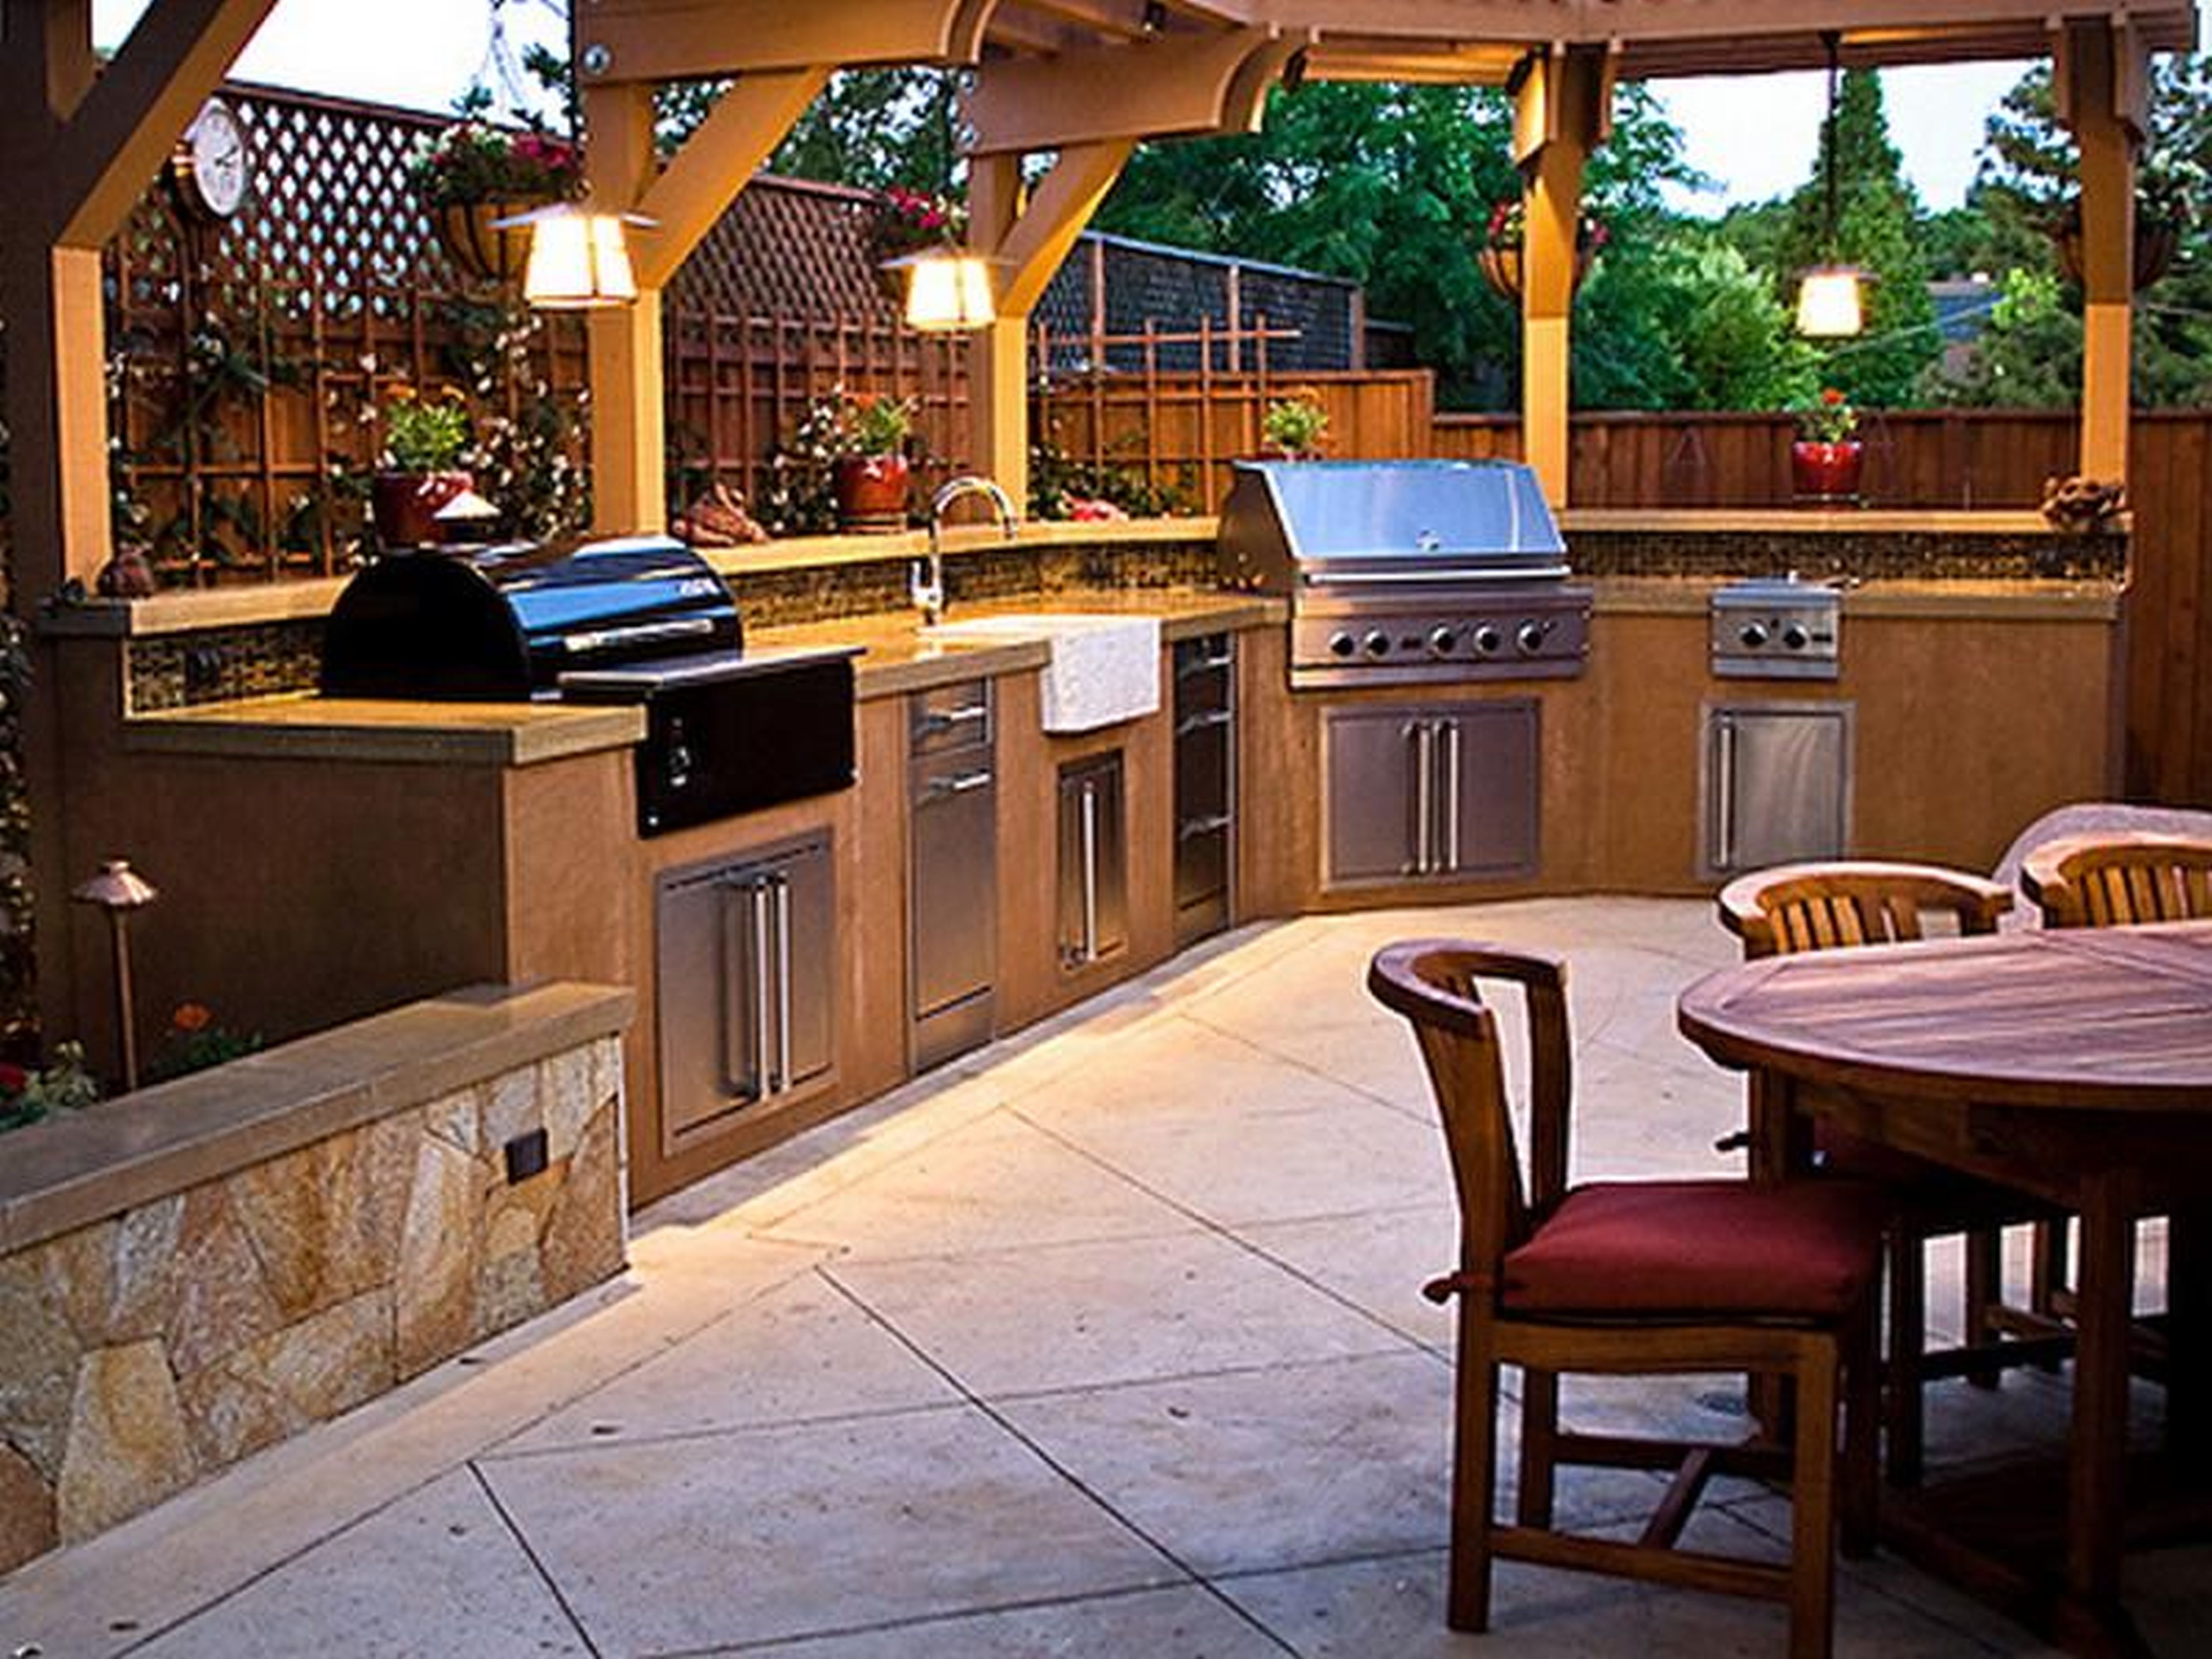 backyard kitchen design photos